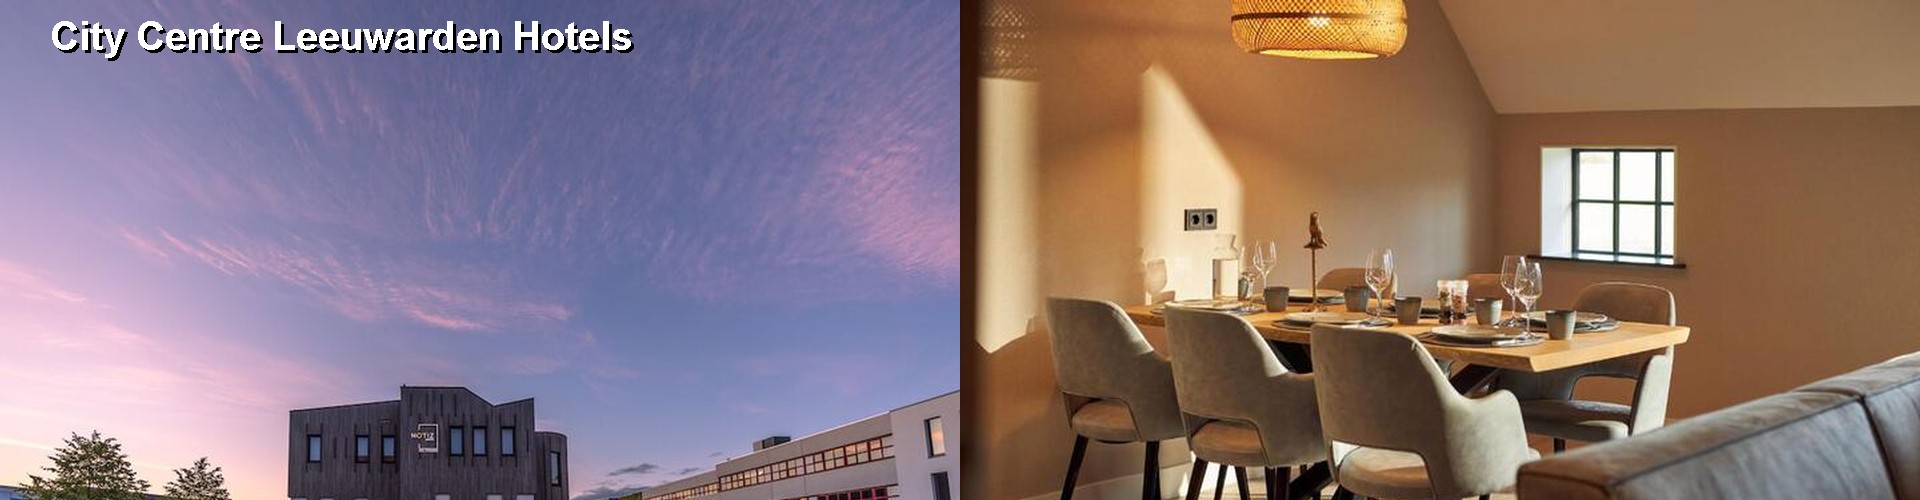 4 Best Hotels near City Centre Leeuwarden